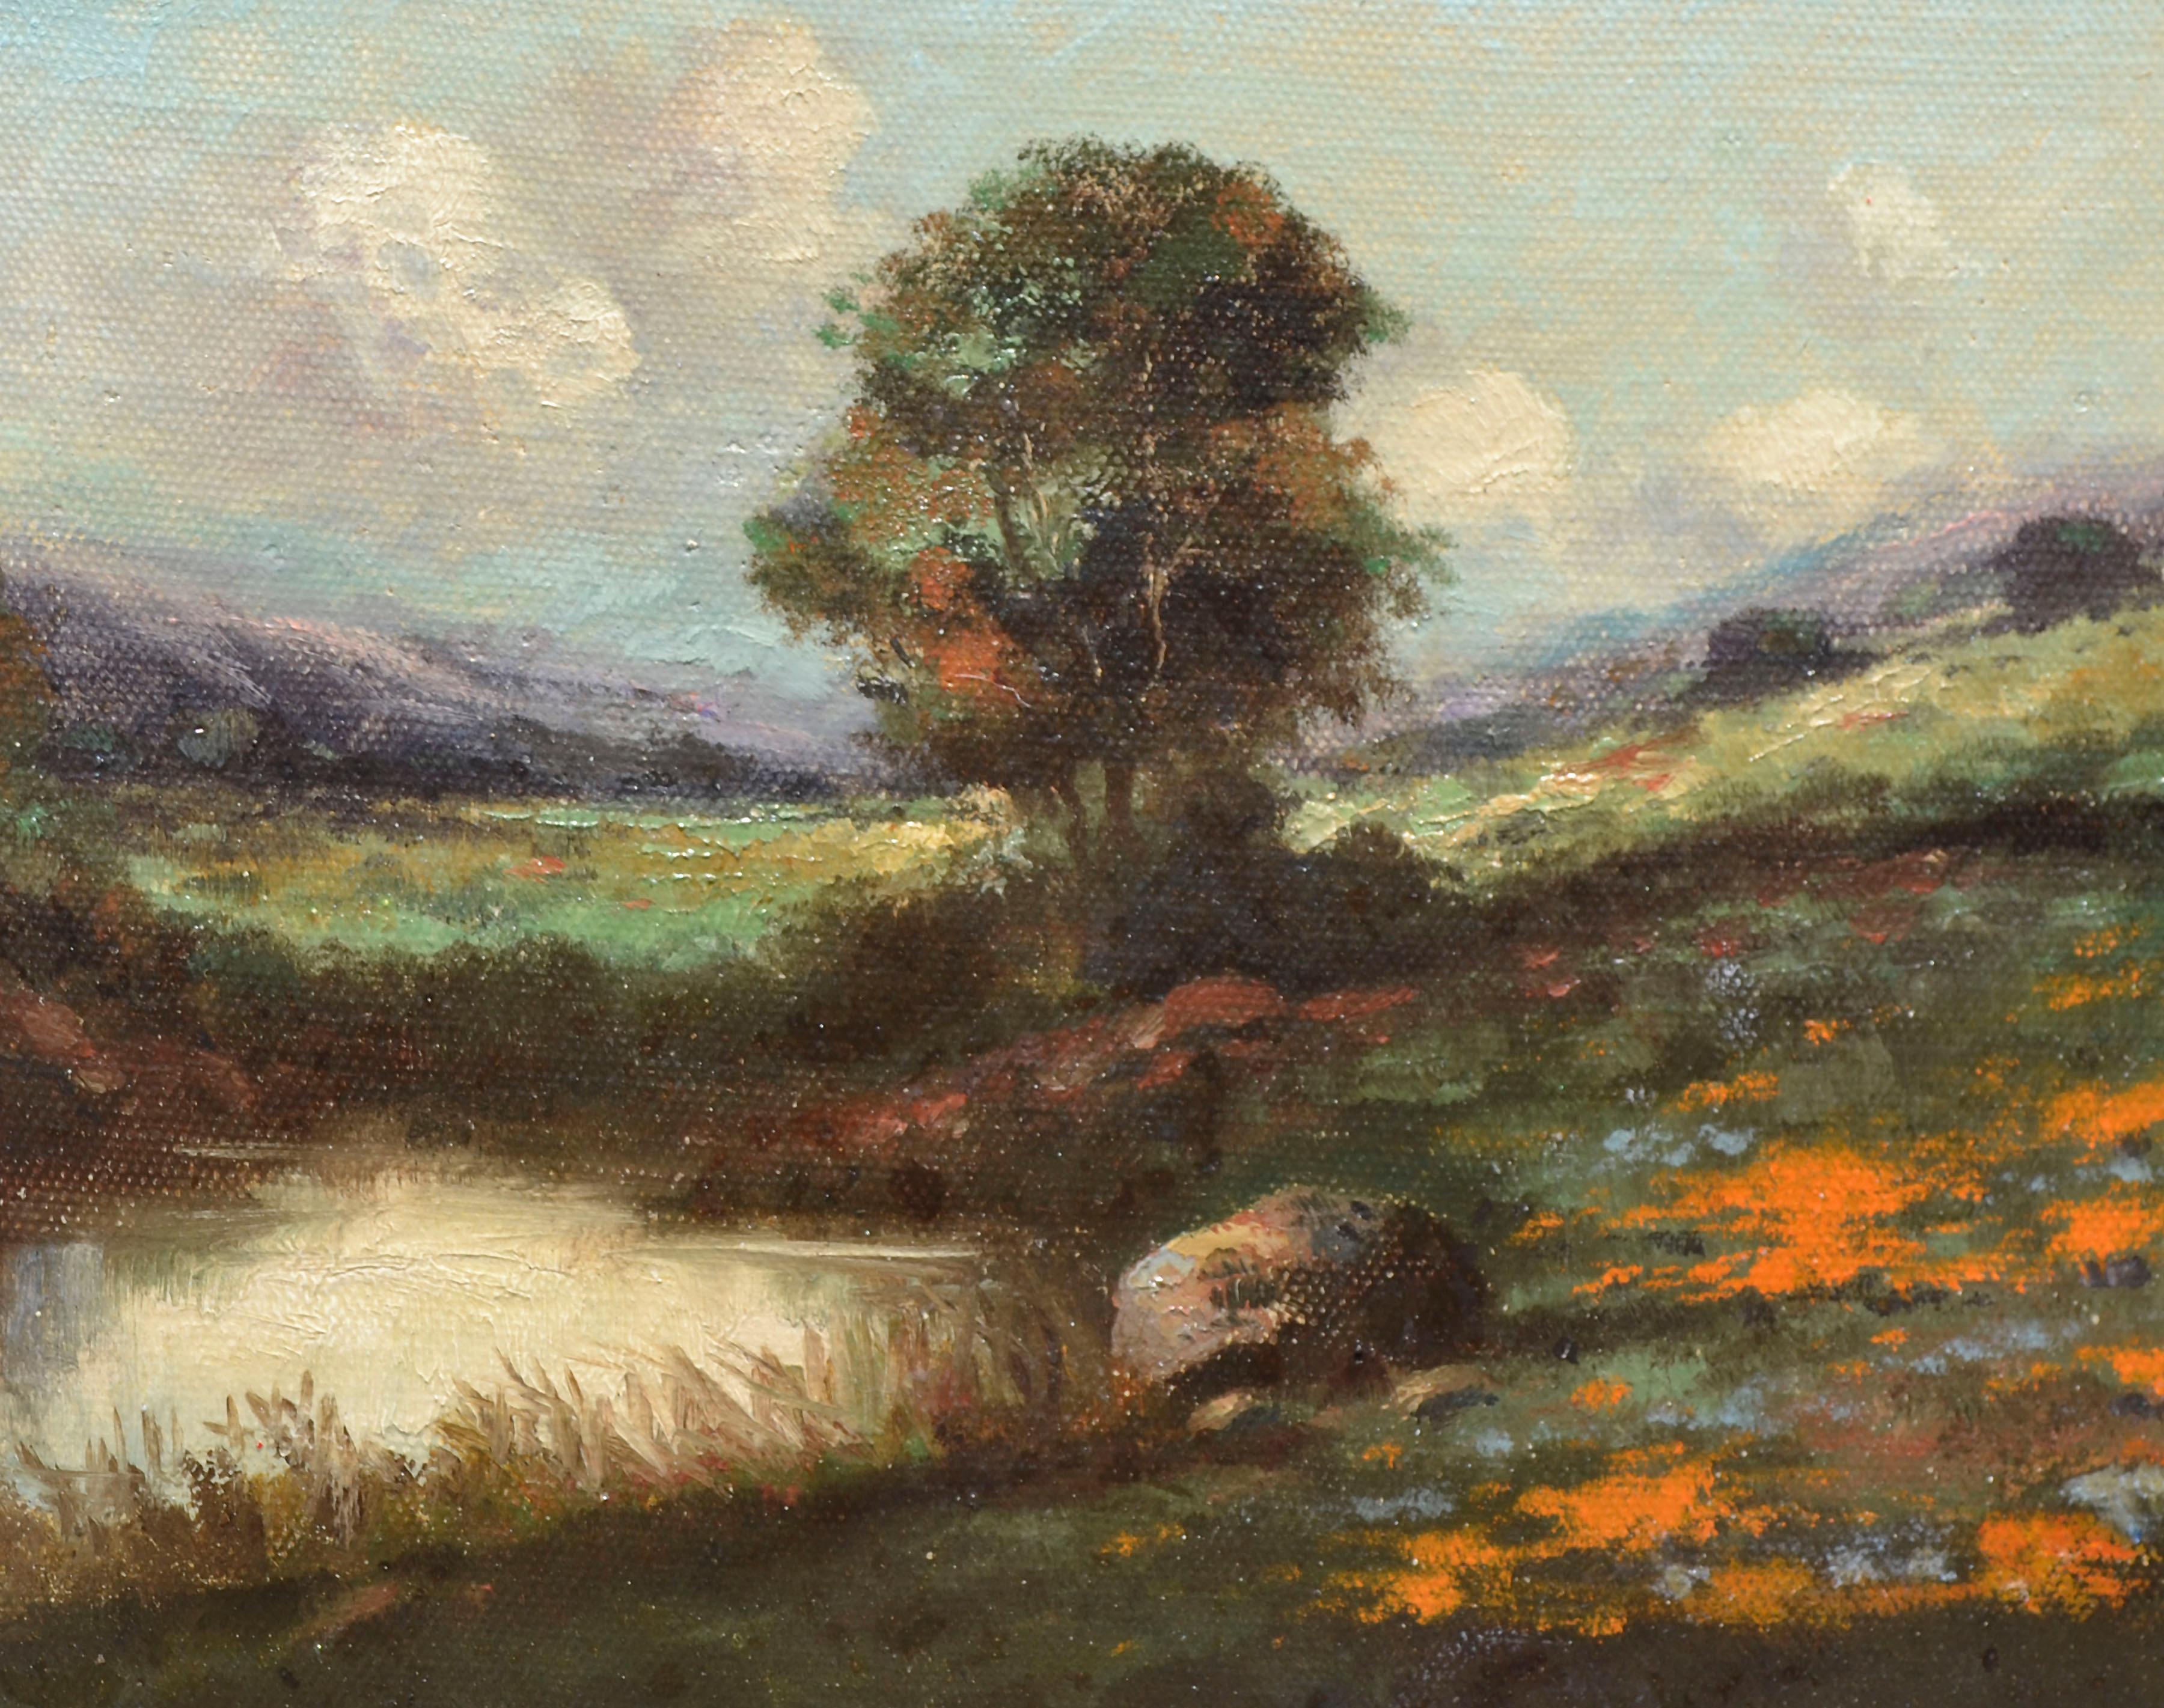 Landscape of San Rafael Looking Toward Mt. Tamalpais - DeTreville - Painting by Unknown